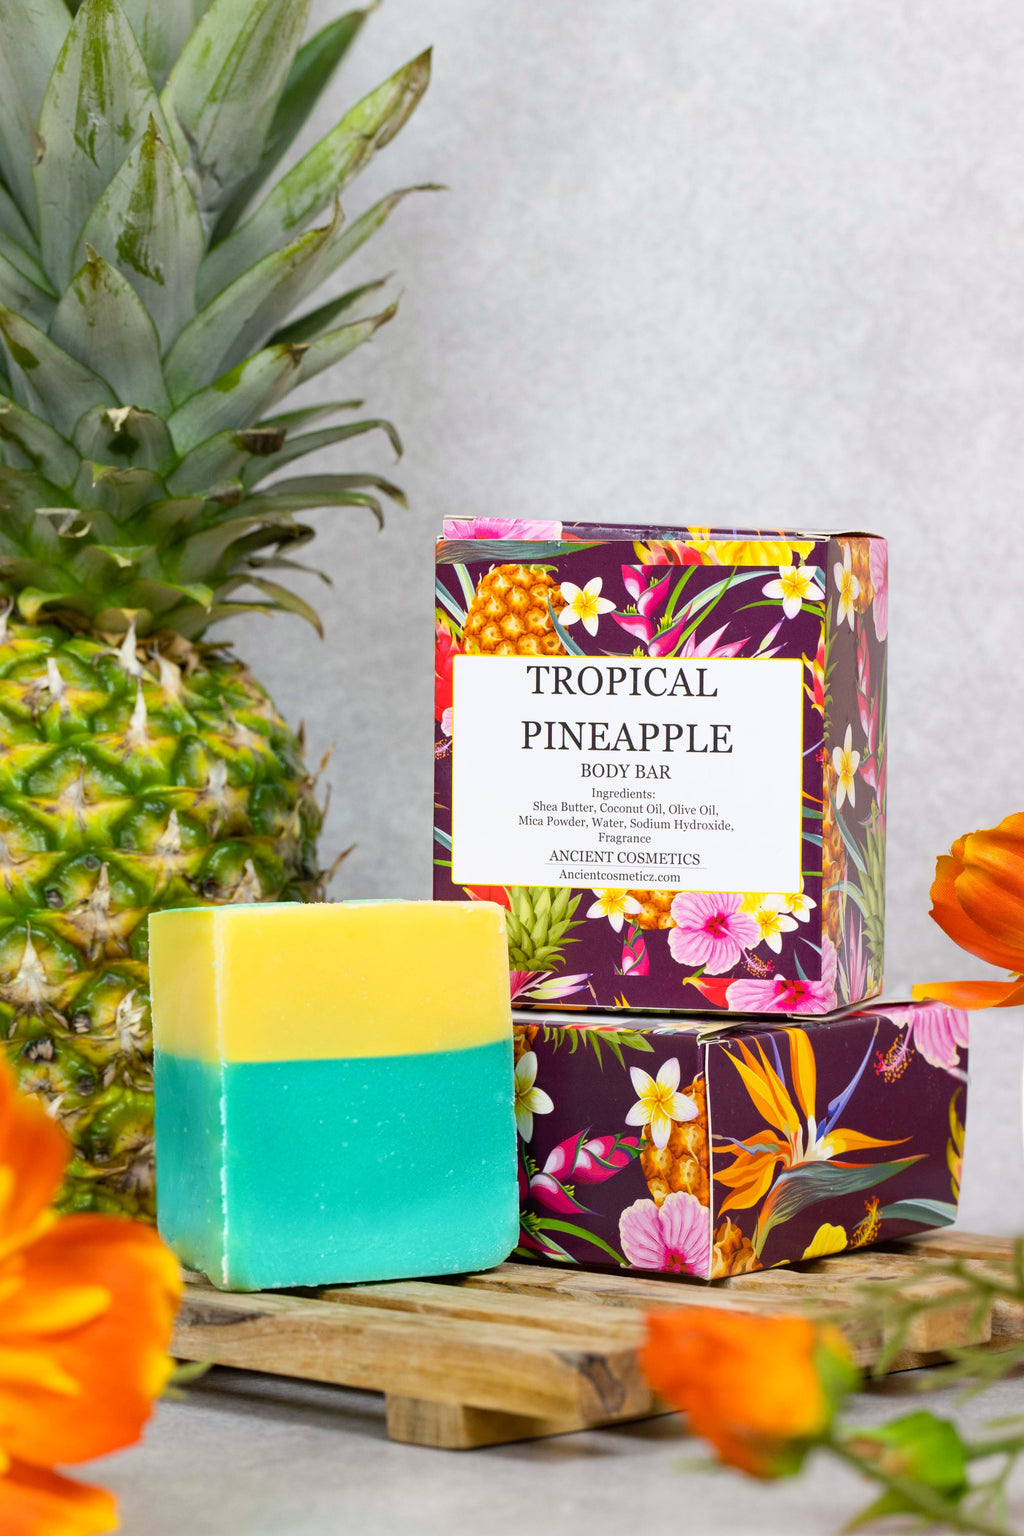 Tropical Pineapple Body Bar